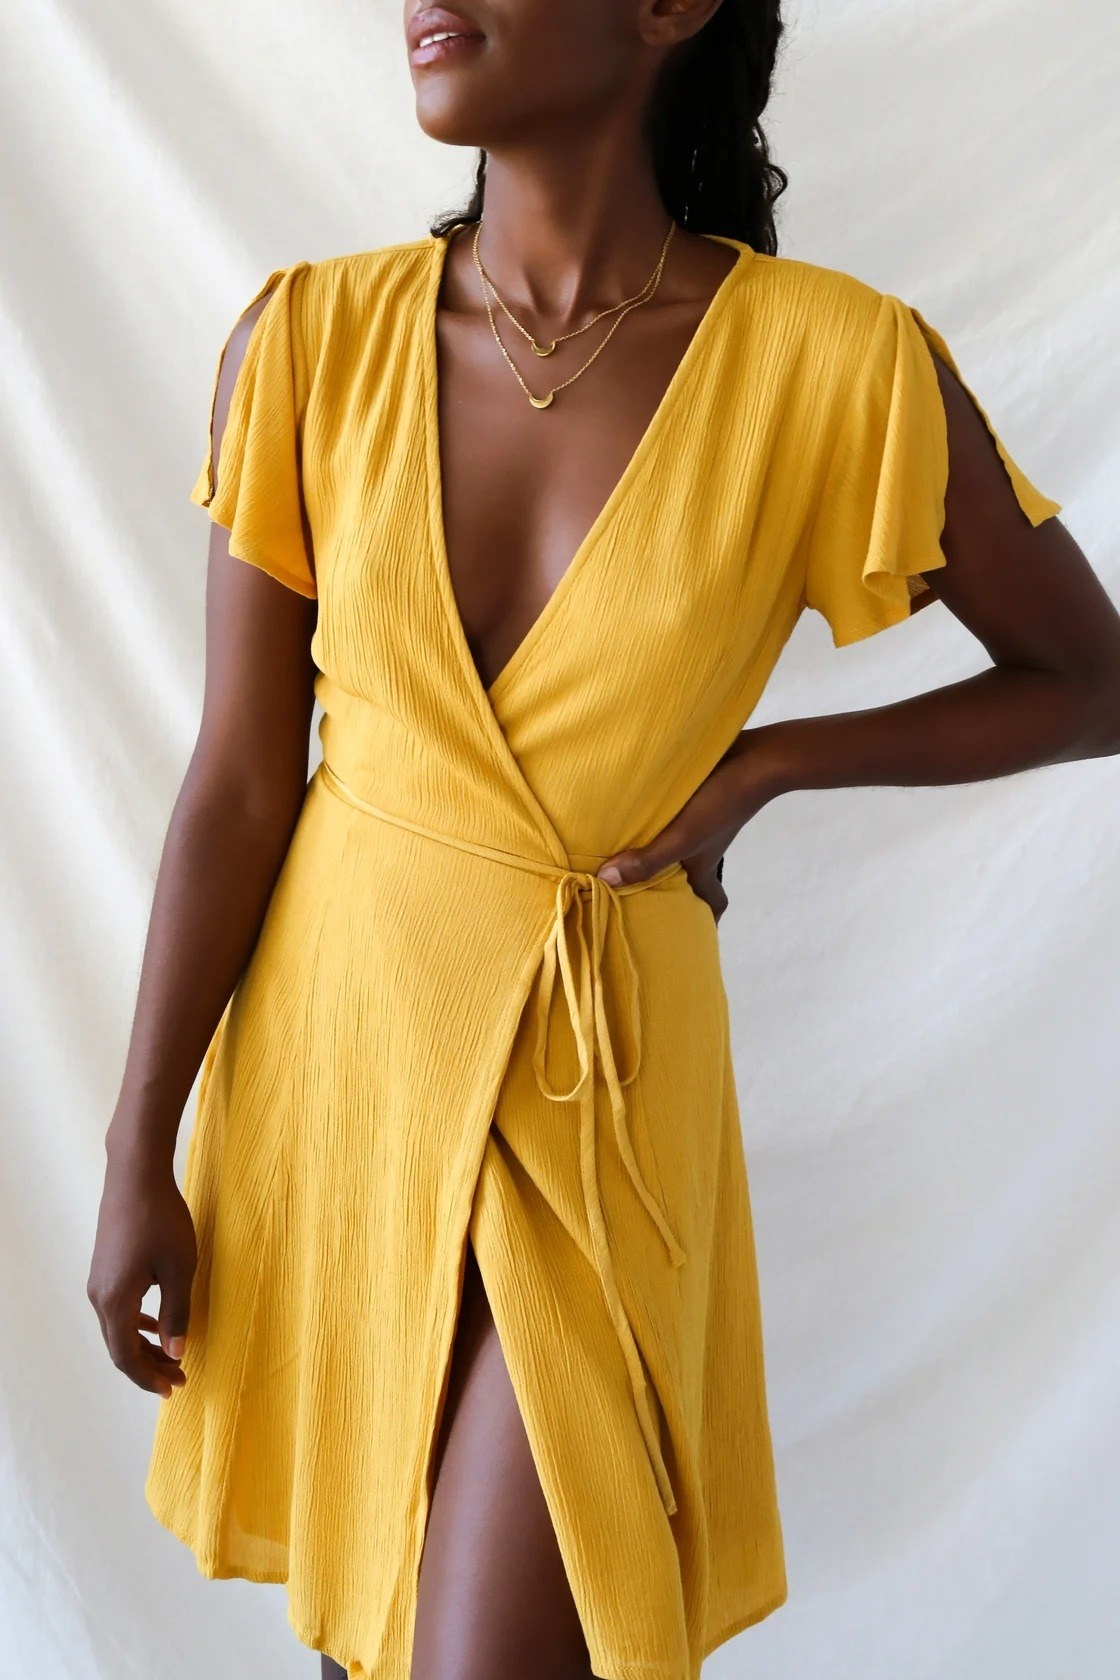 Model wearing the yellow dress